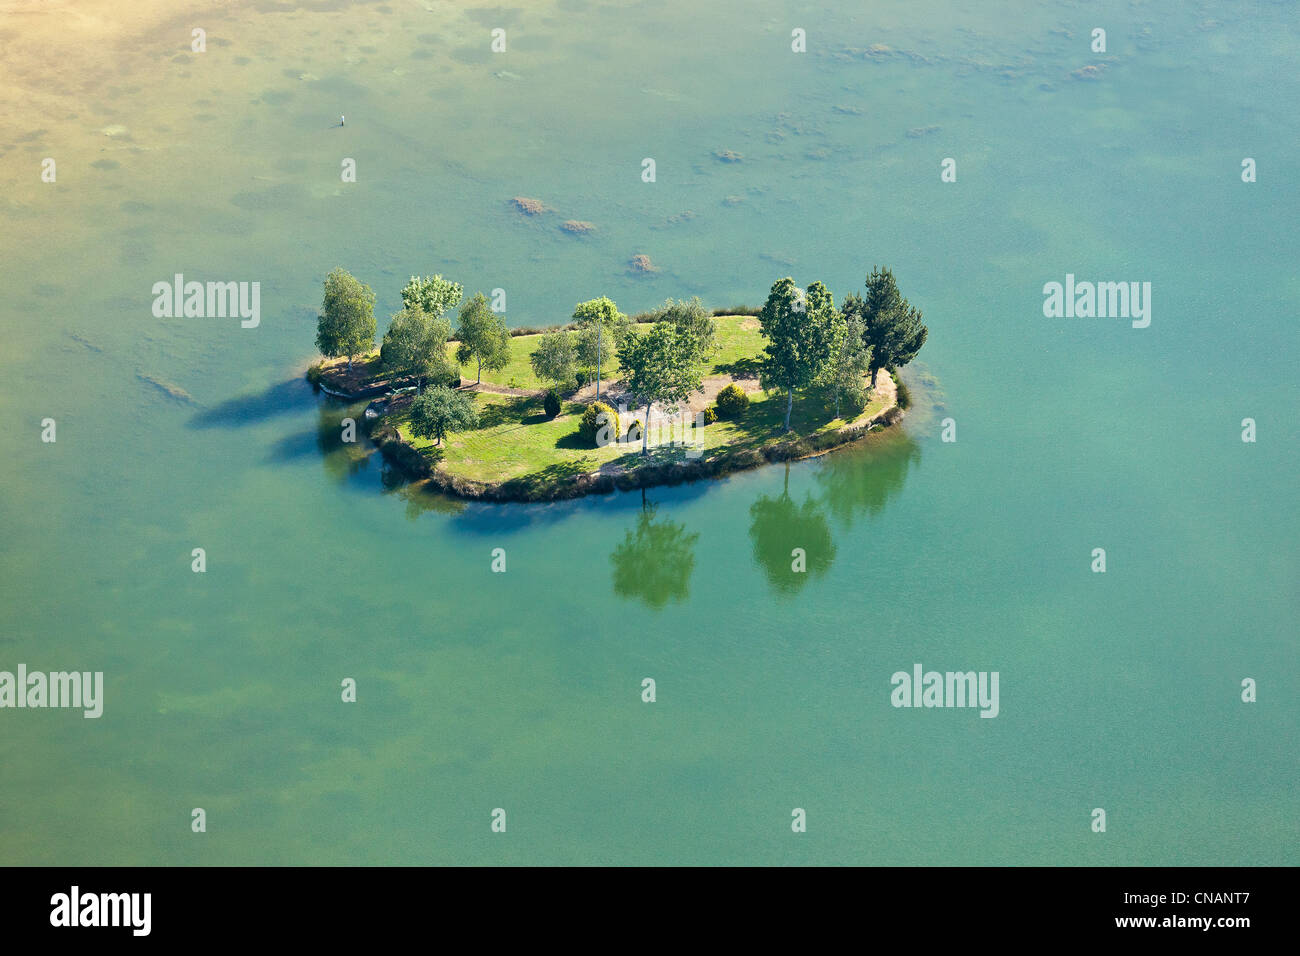 France, Loire-Atlantique, Saint-Aubin-des-Châteaux, small island on a pond (aerial photography) Stock Photo